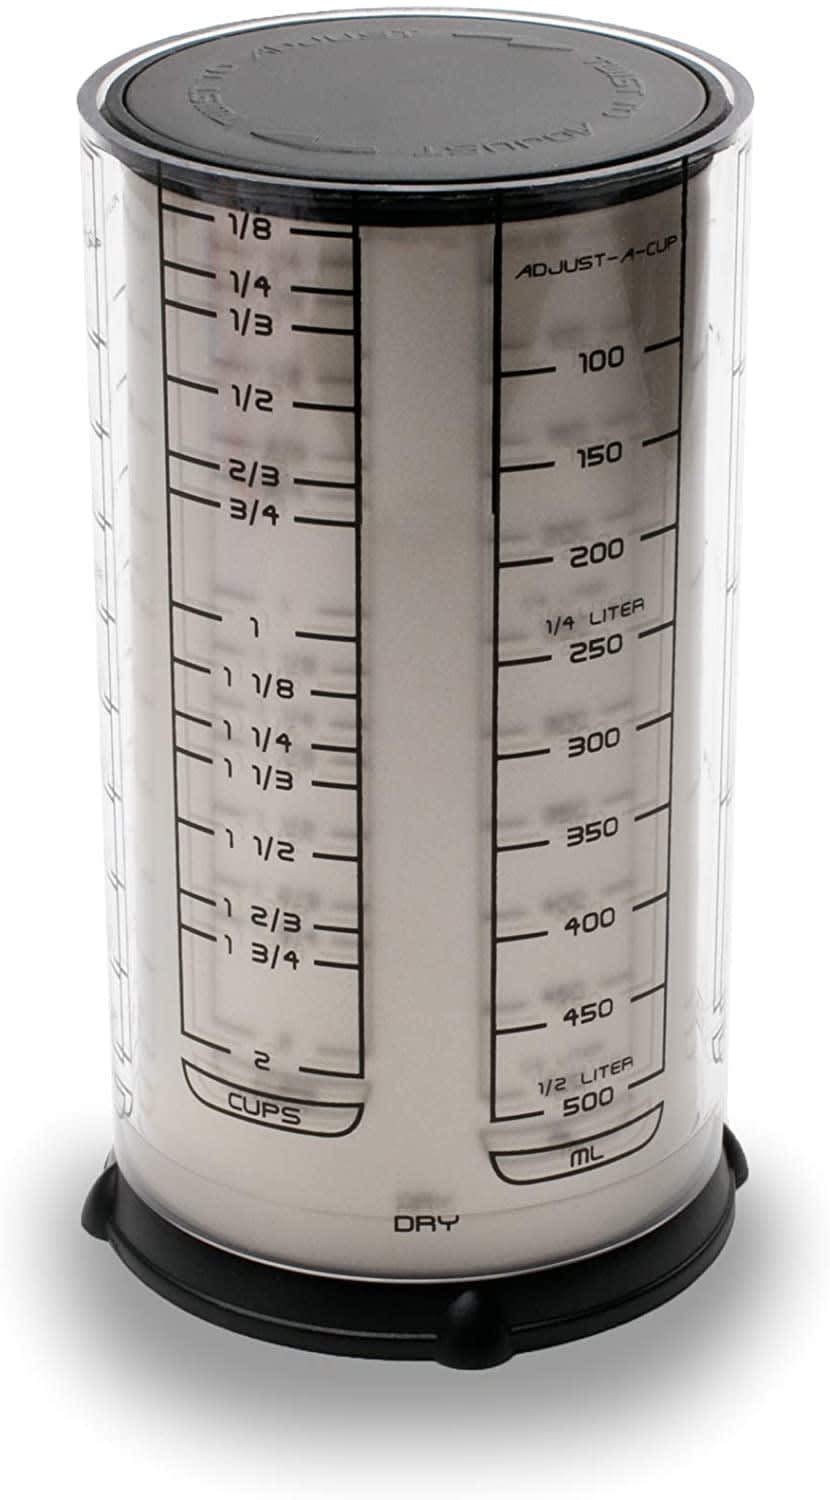 Should I Buy an Adjustable Measuring Cup?